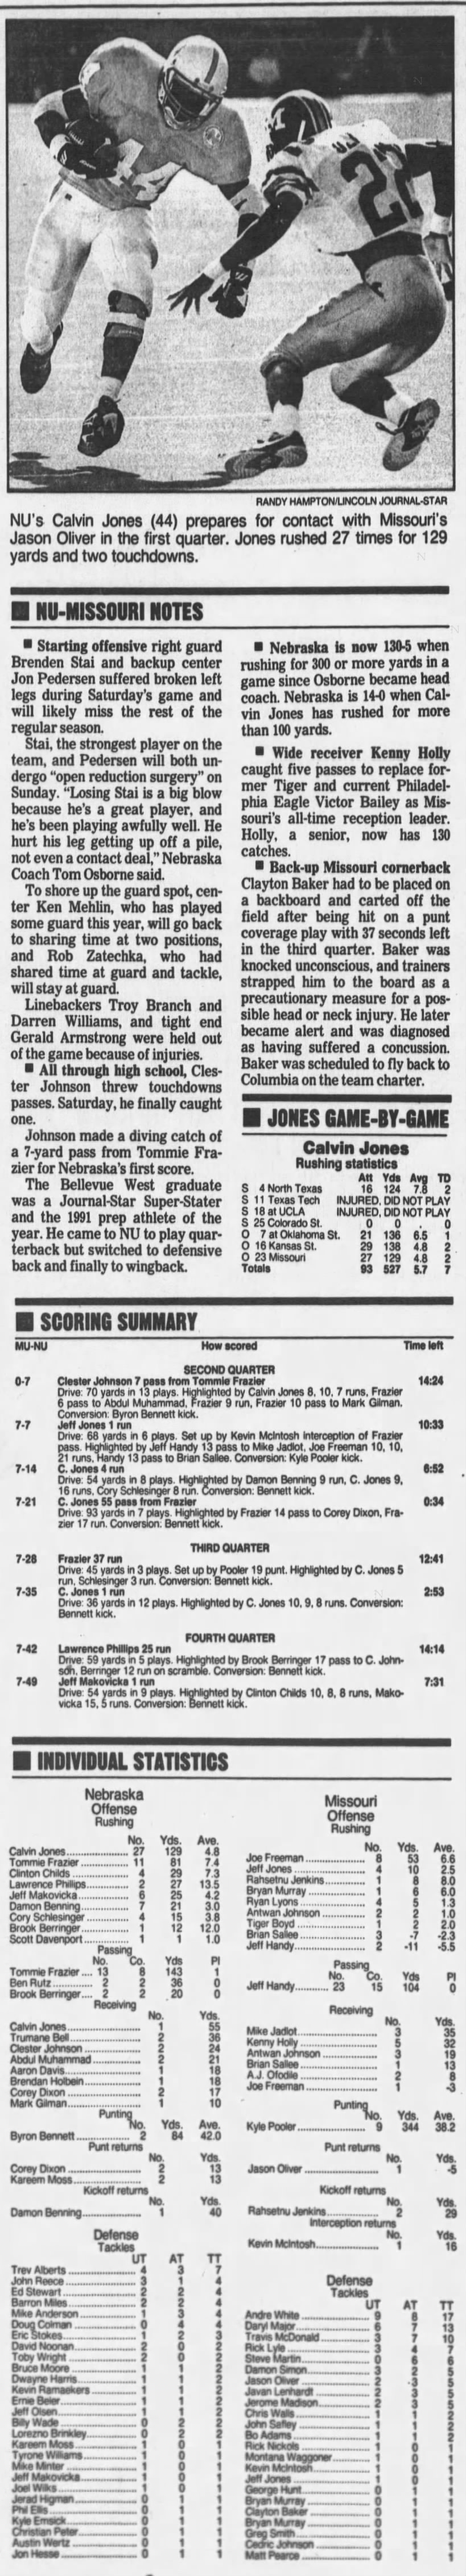 1993 Nebraska-Missouri football scoring